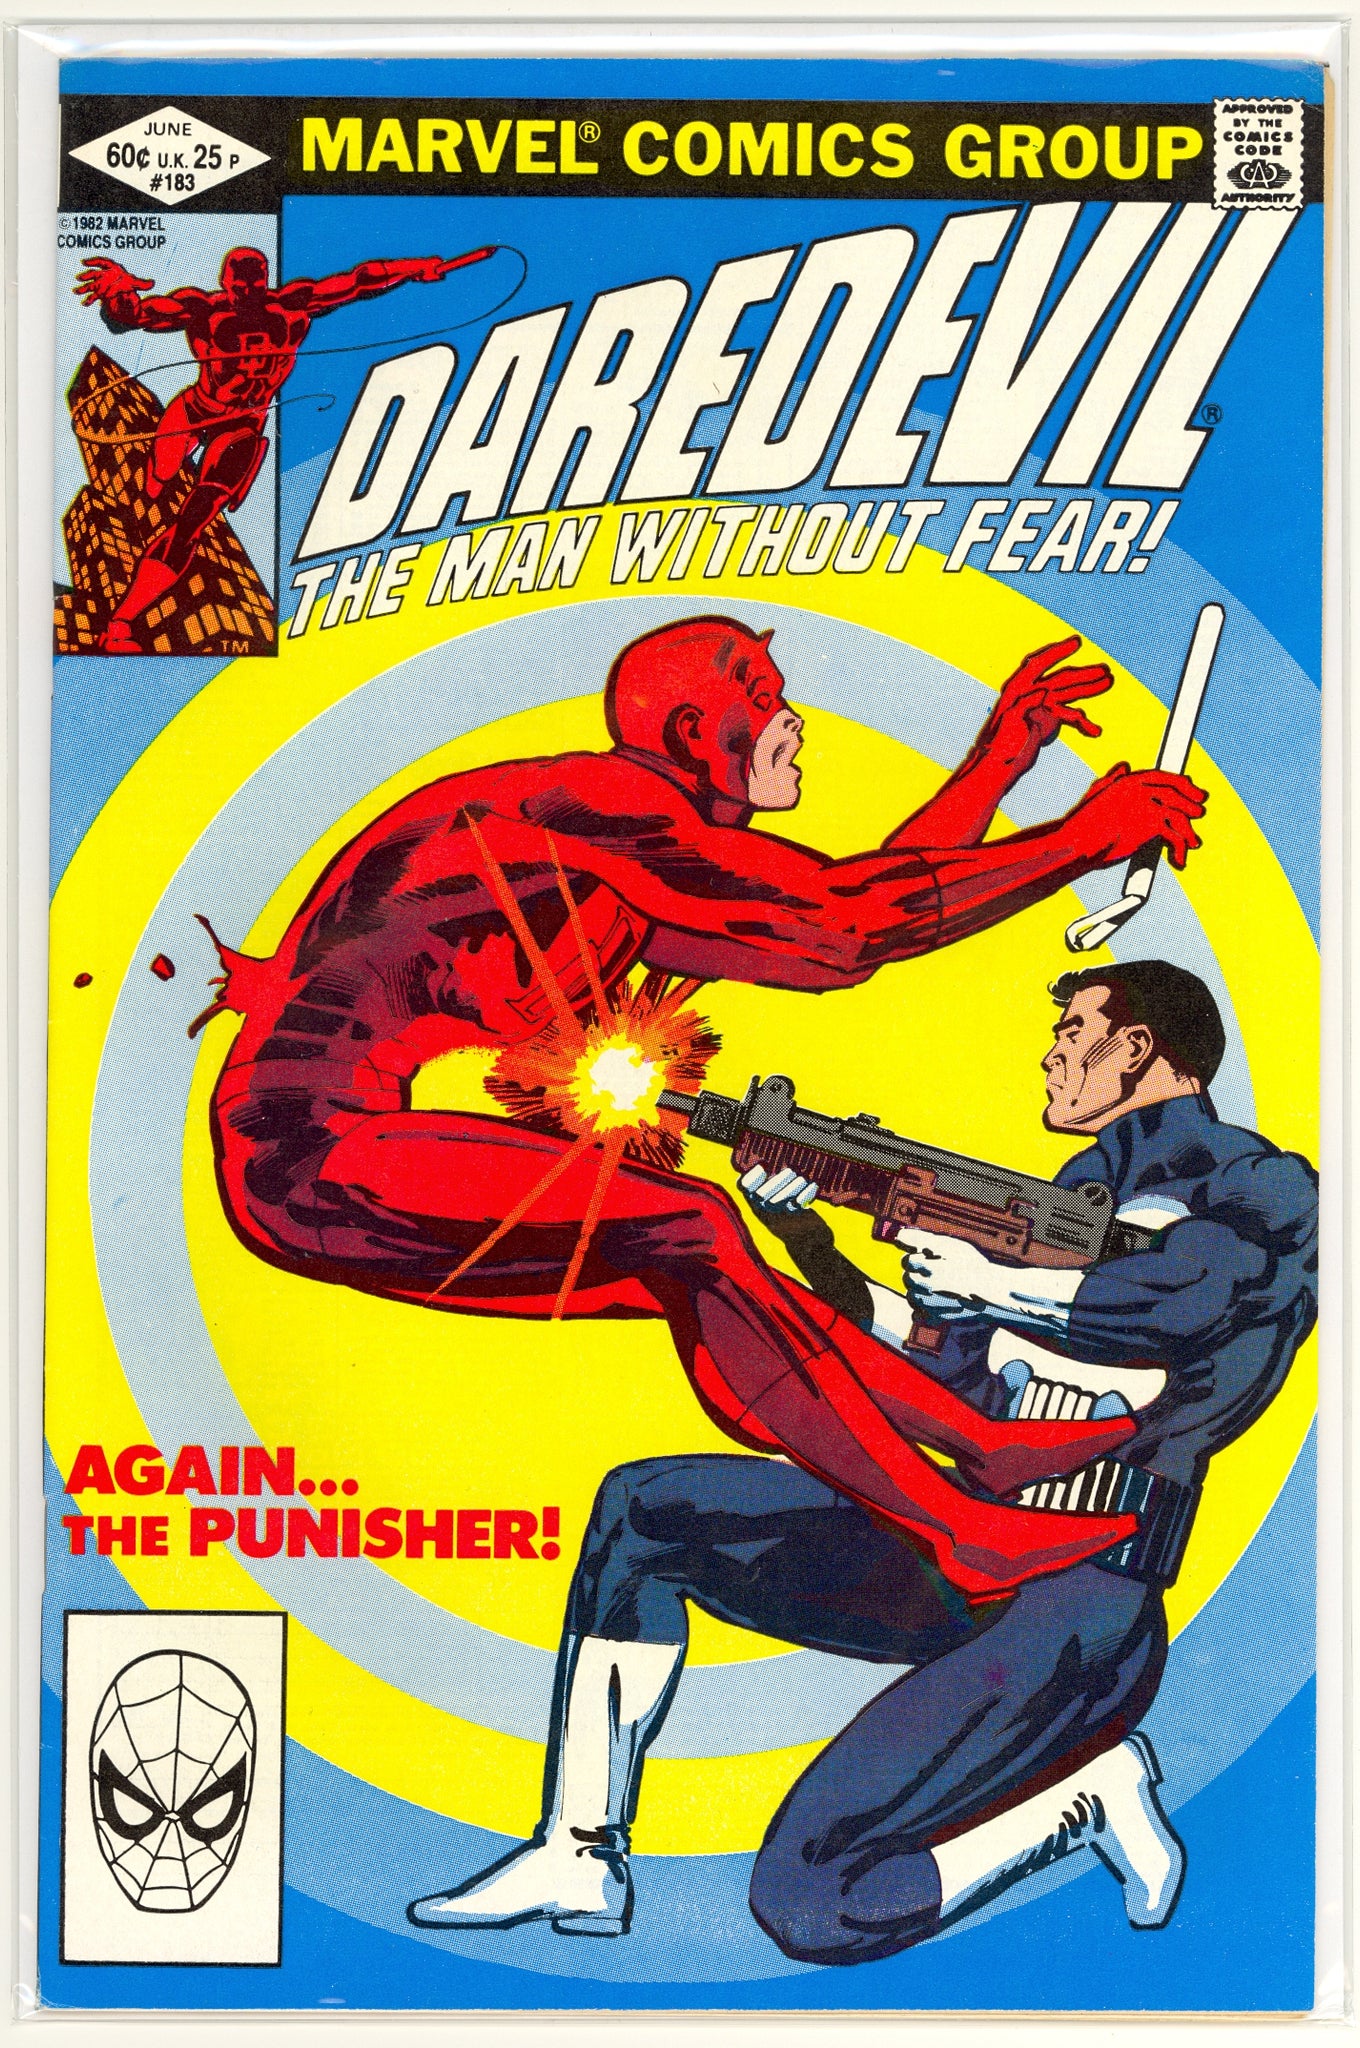 Daredevil #183 (1982) Punisher